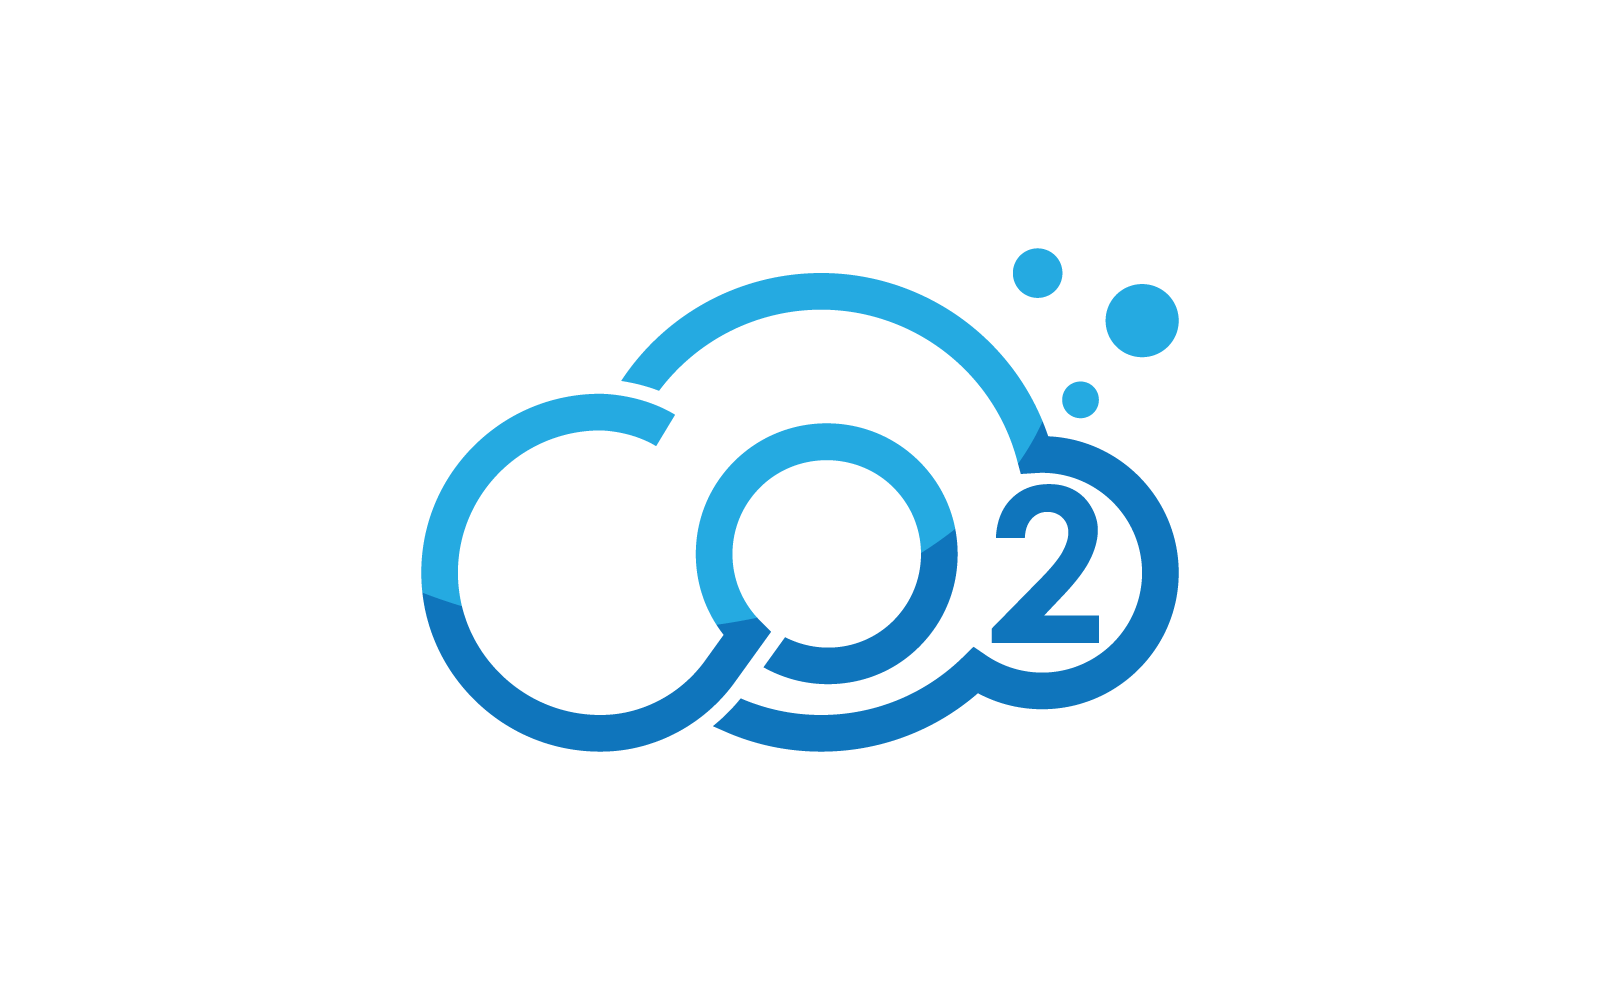 Co2 Carbon dioxide logo flat design Logo Template